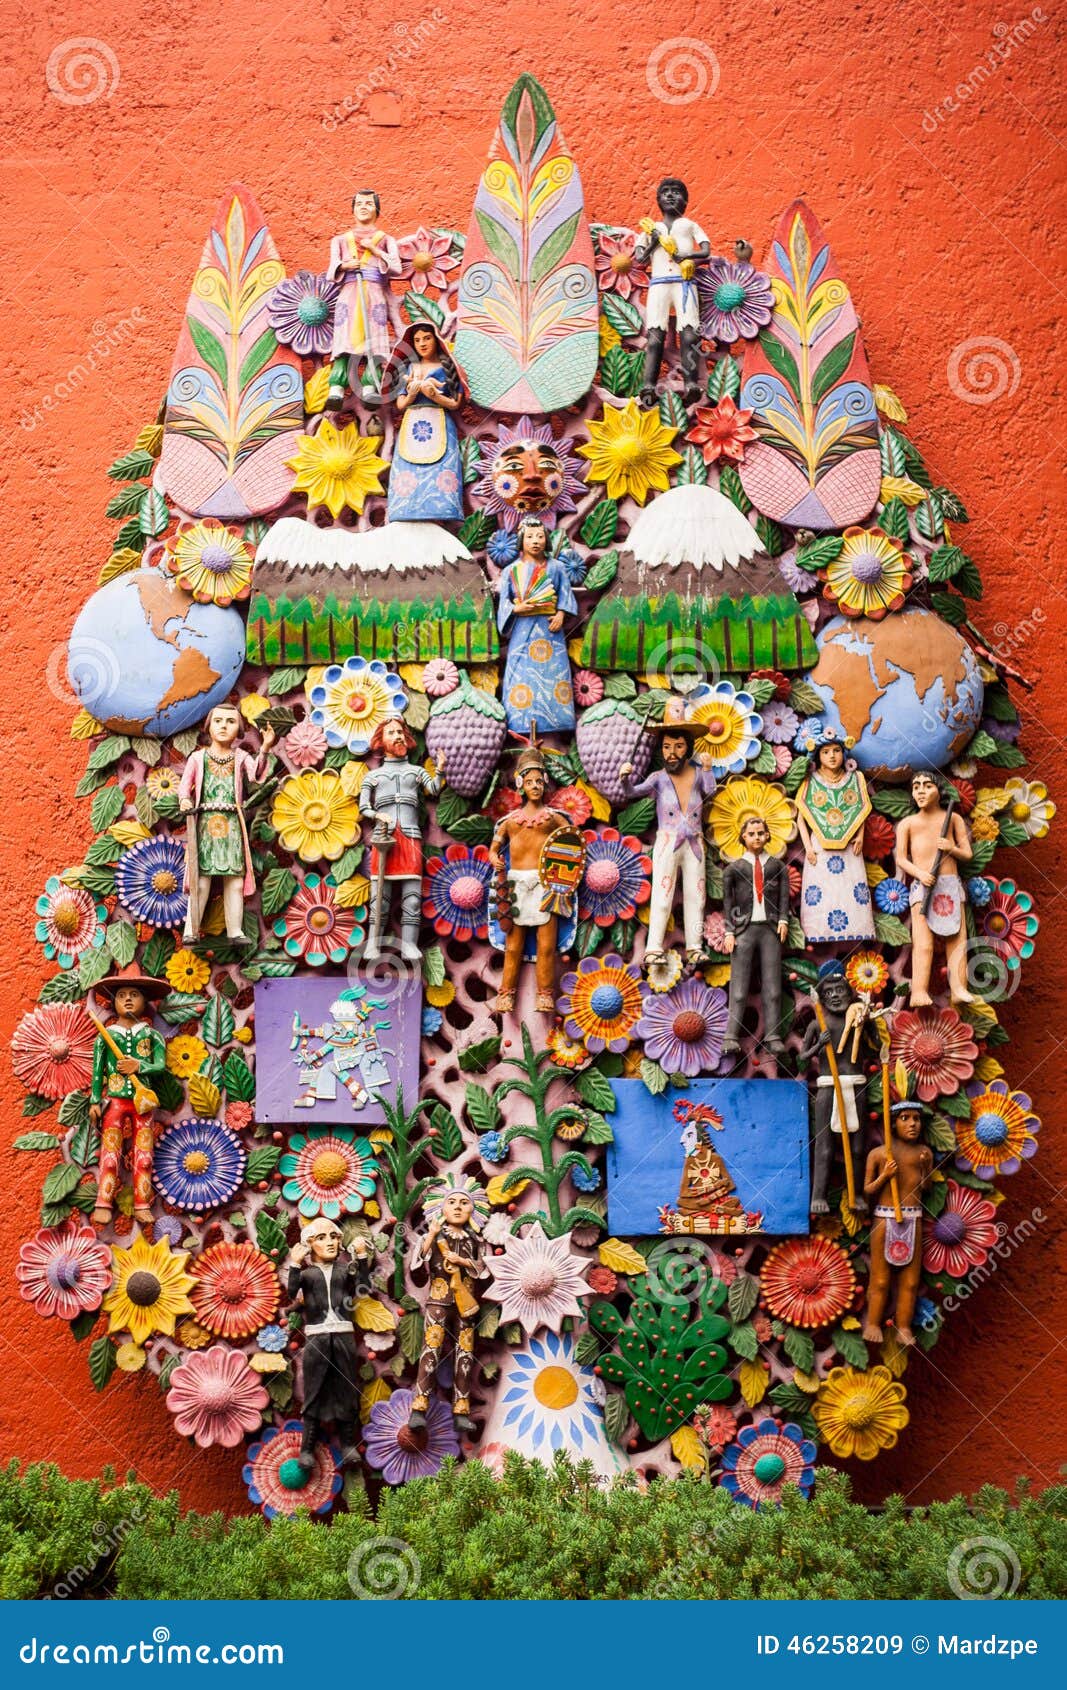 el arbol de la vida, the tree of life, an aztec tradition